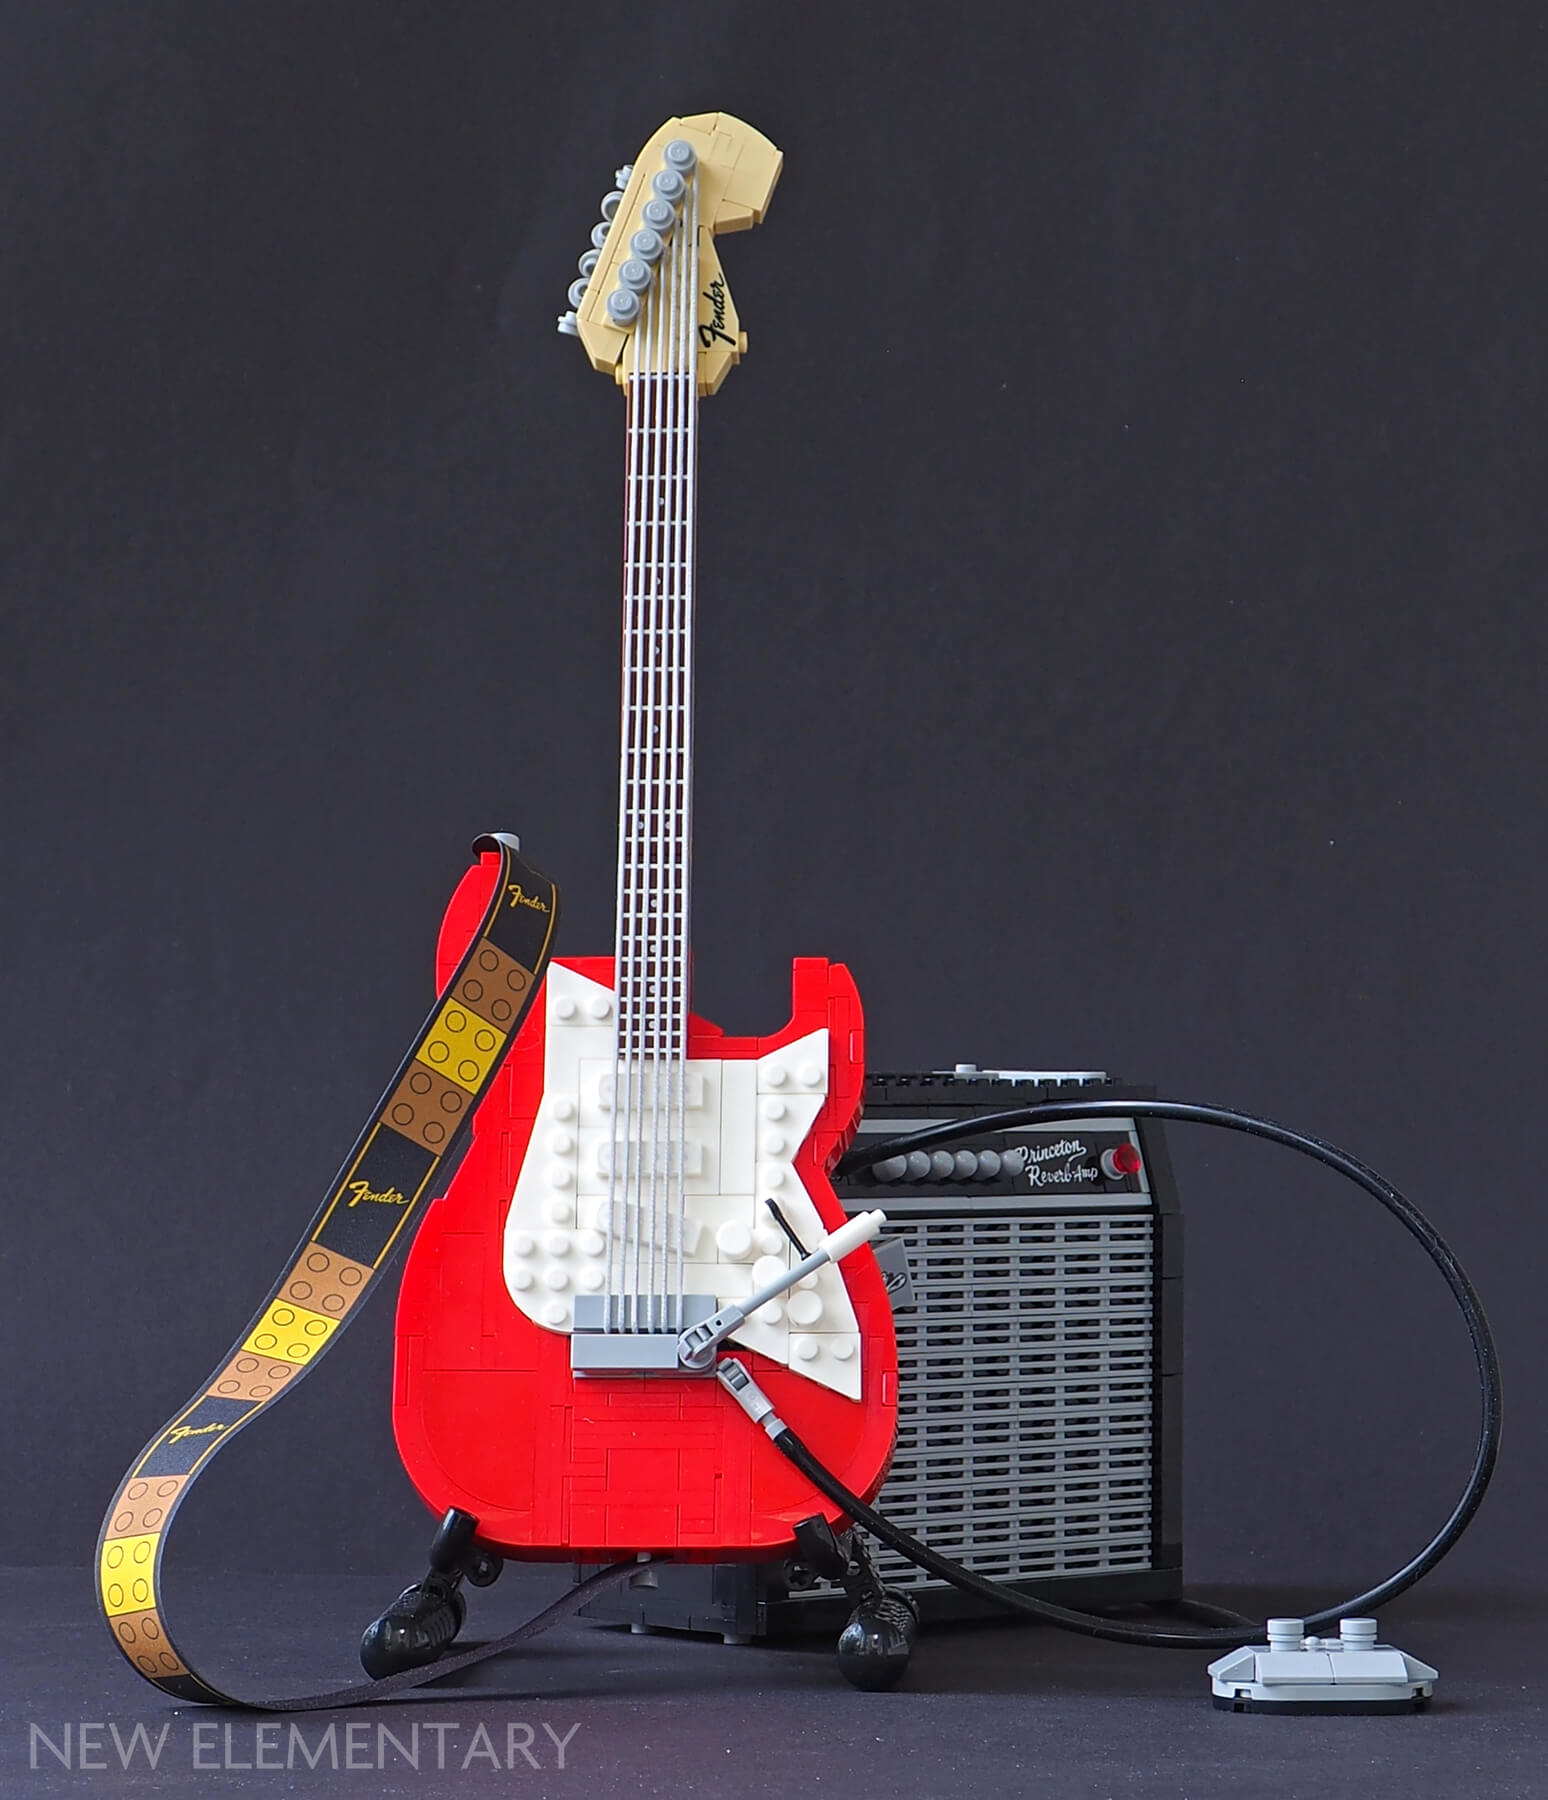 GUITAR Fender Stratocaster Lego classic 11014 ideas How to build